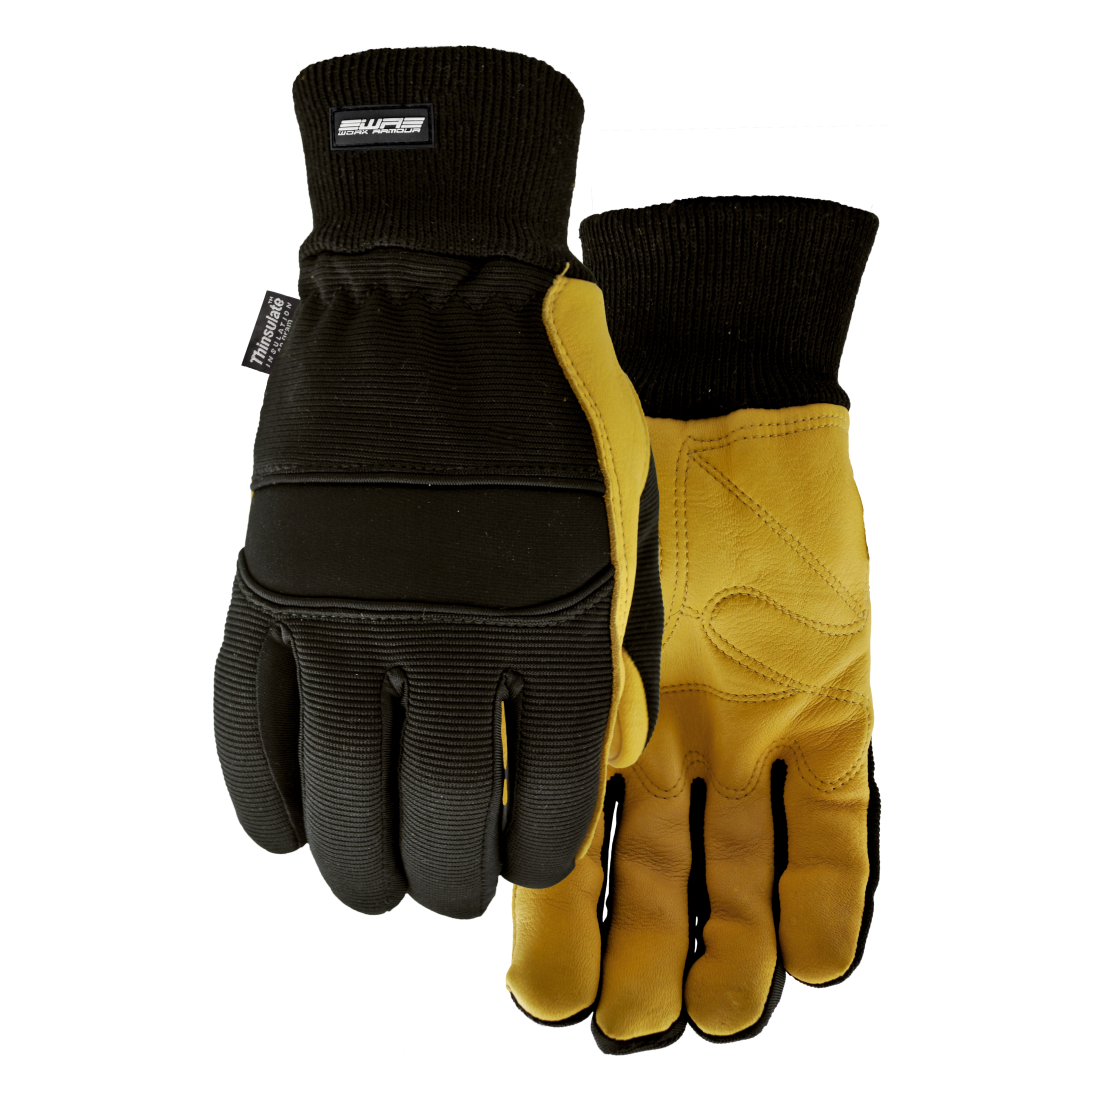 Ratchet Winter Gloves